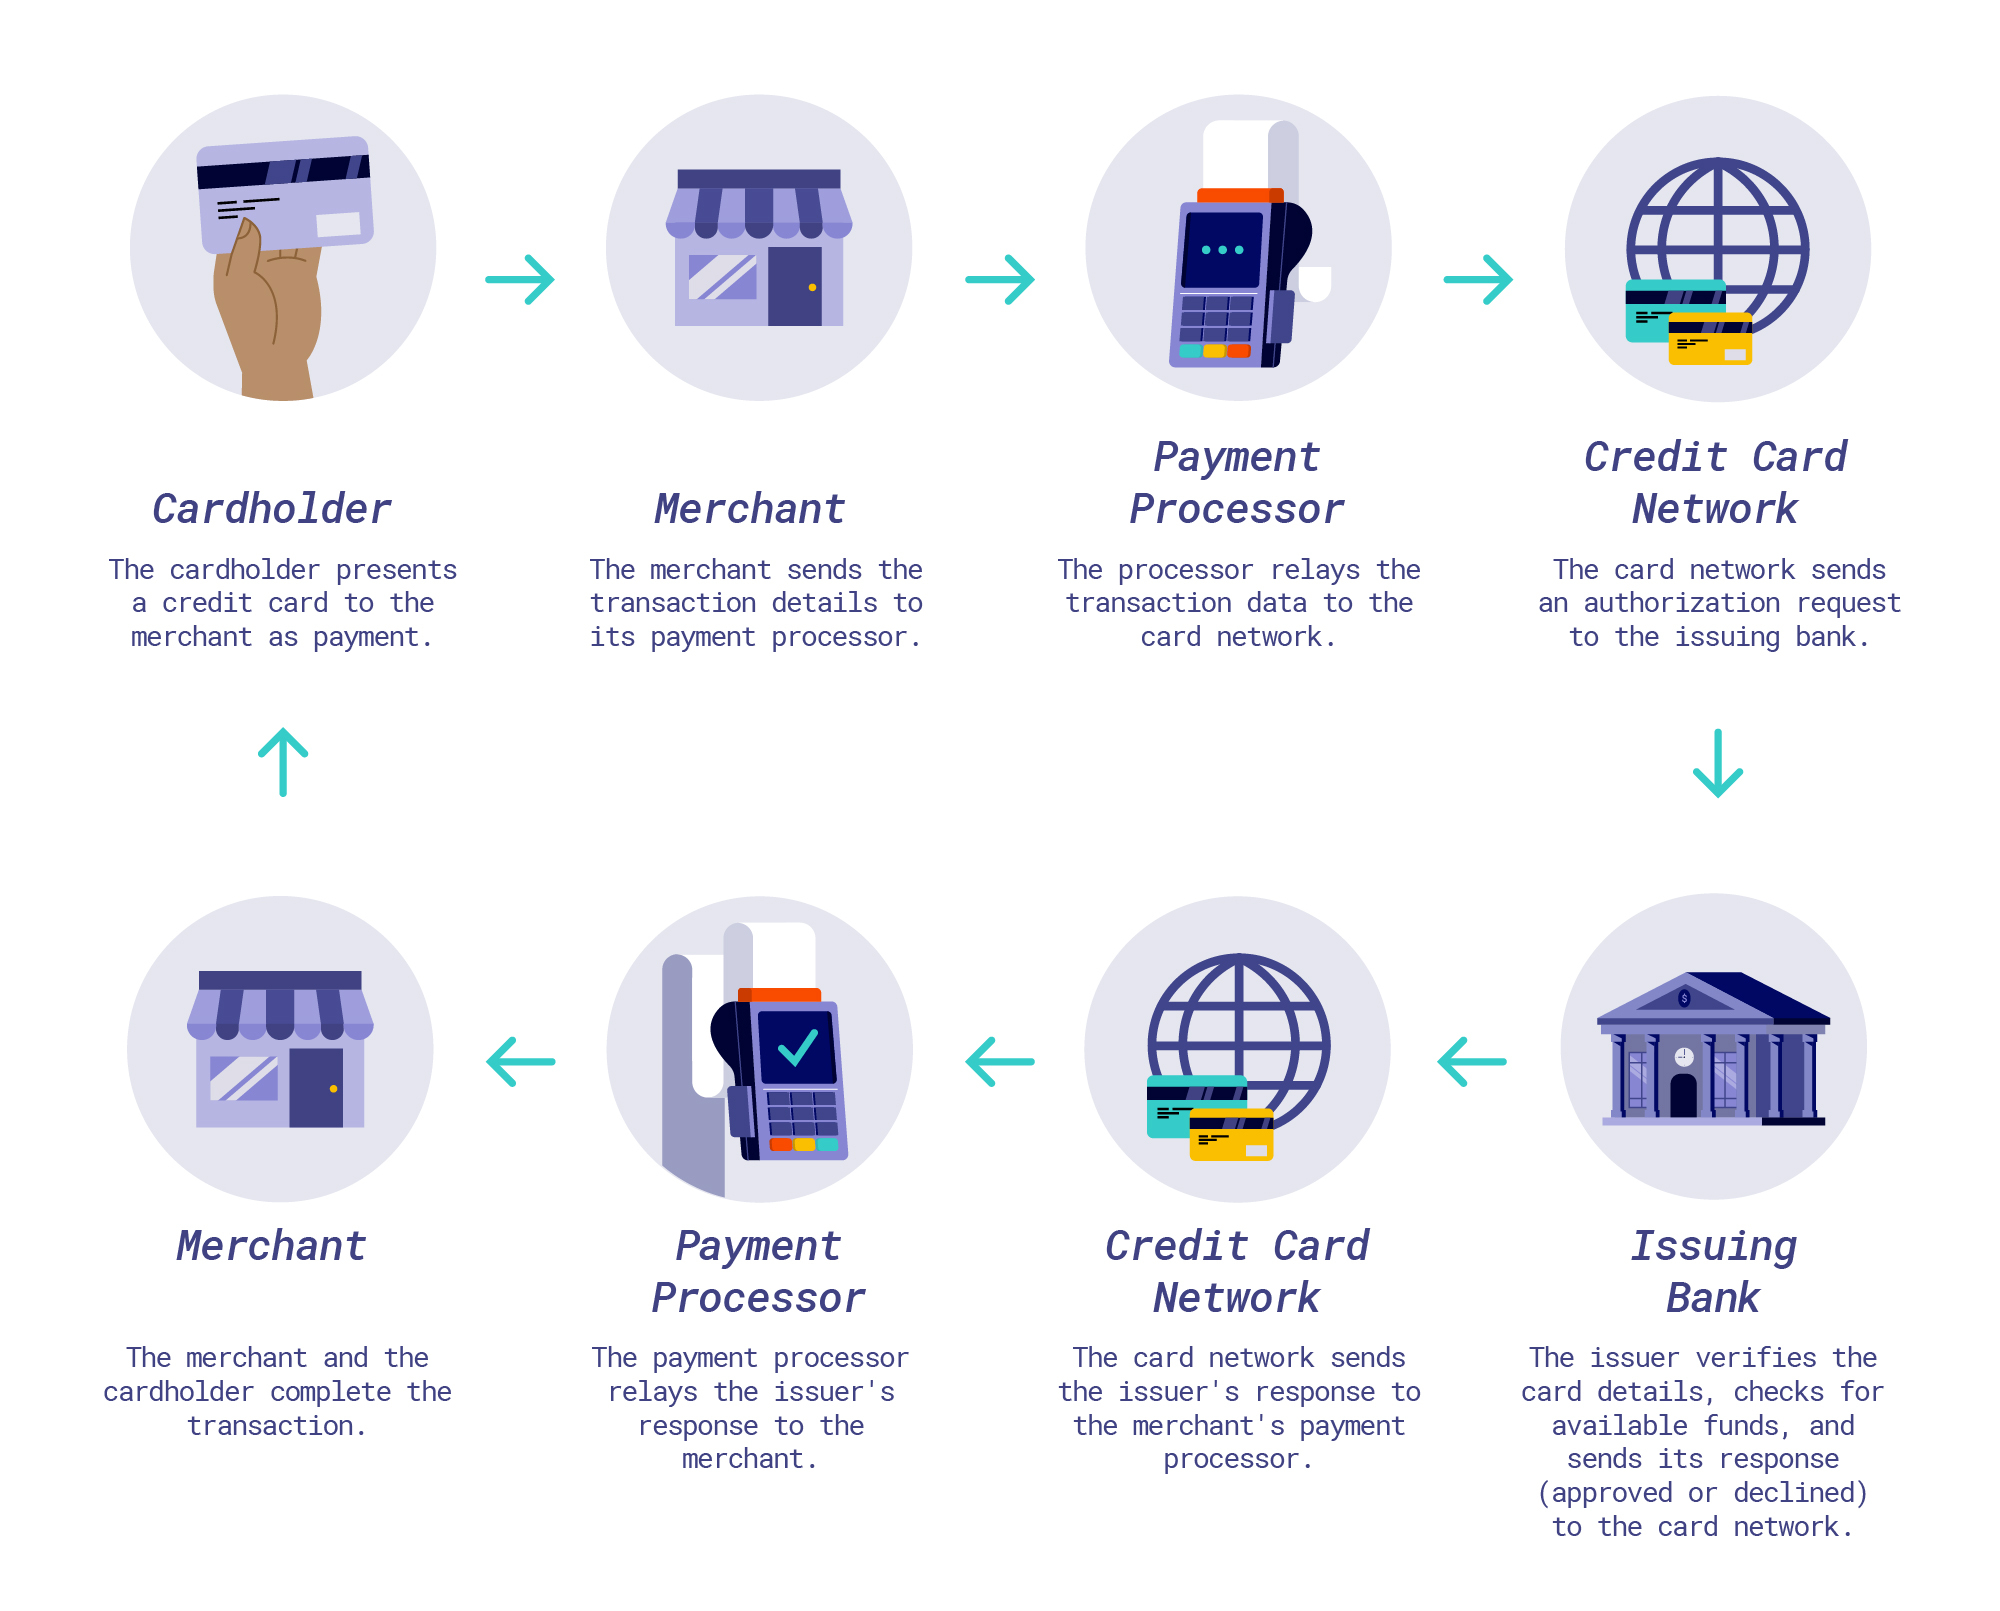 Credit Card Transaction Process